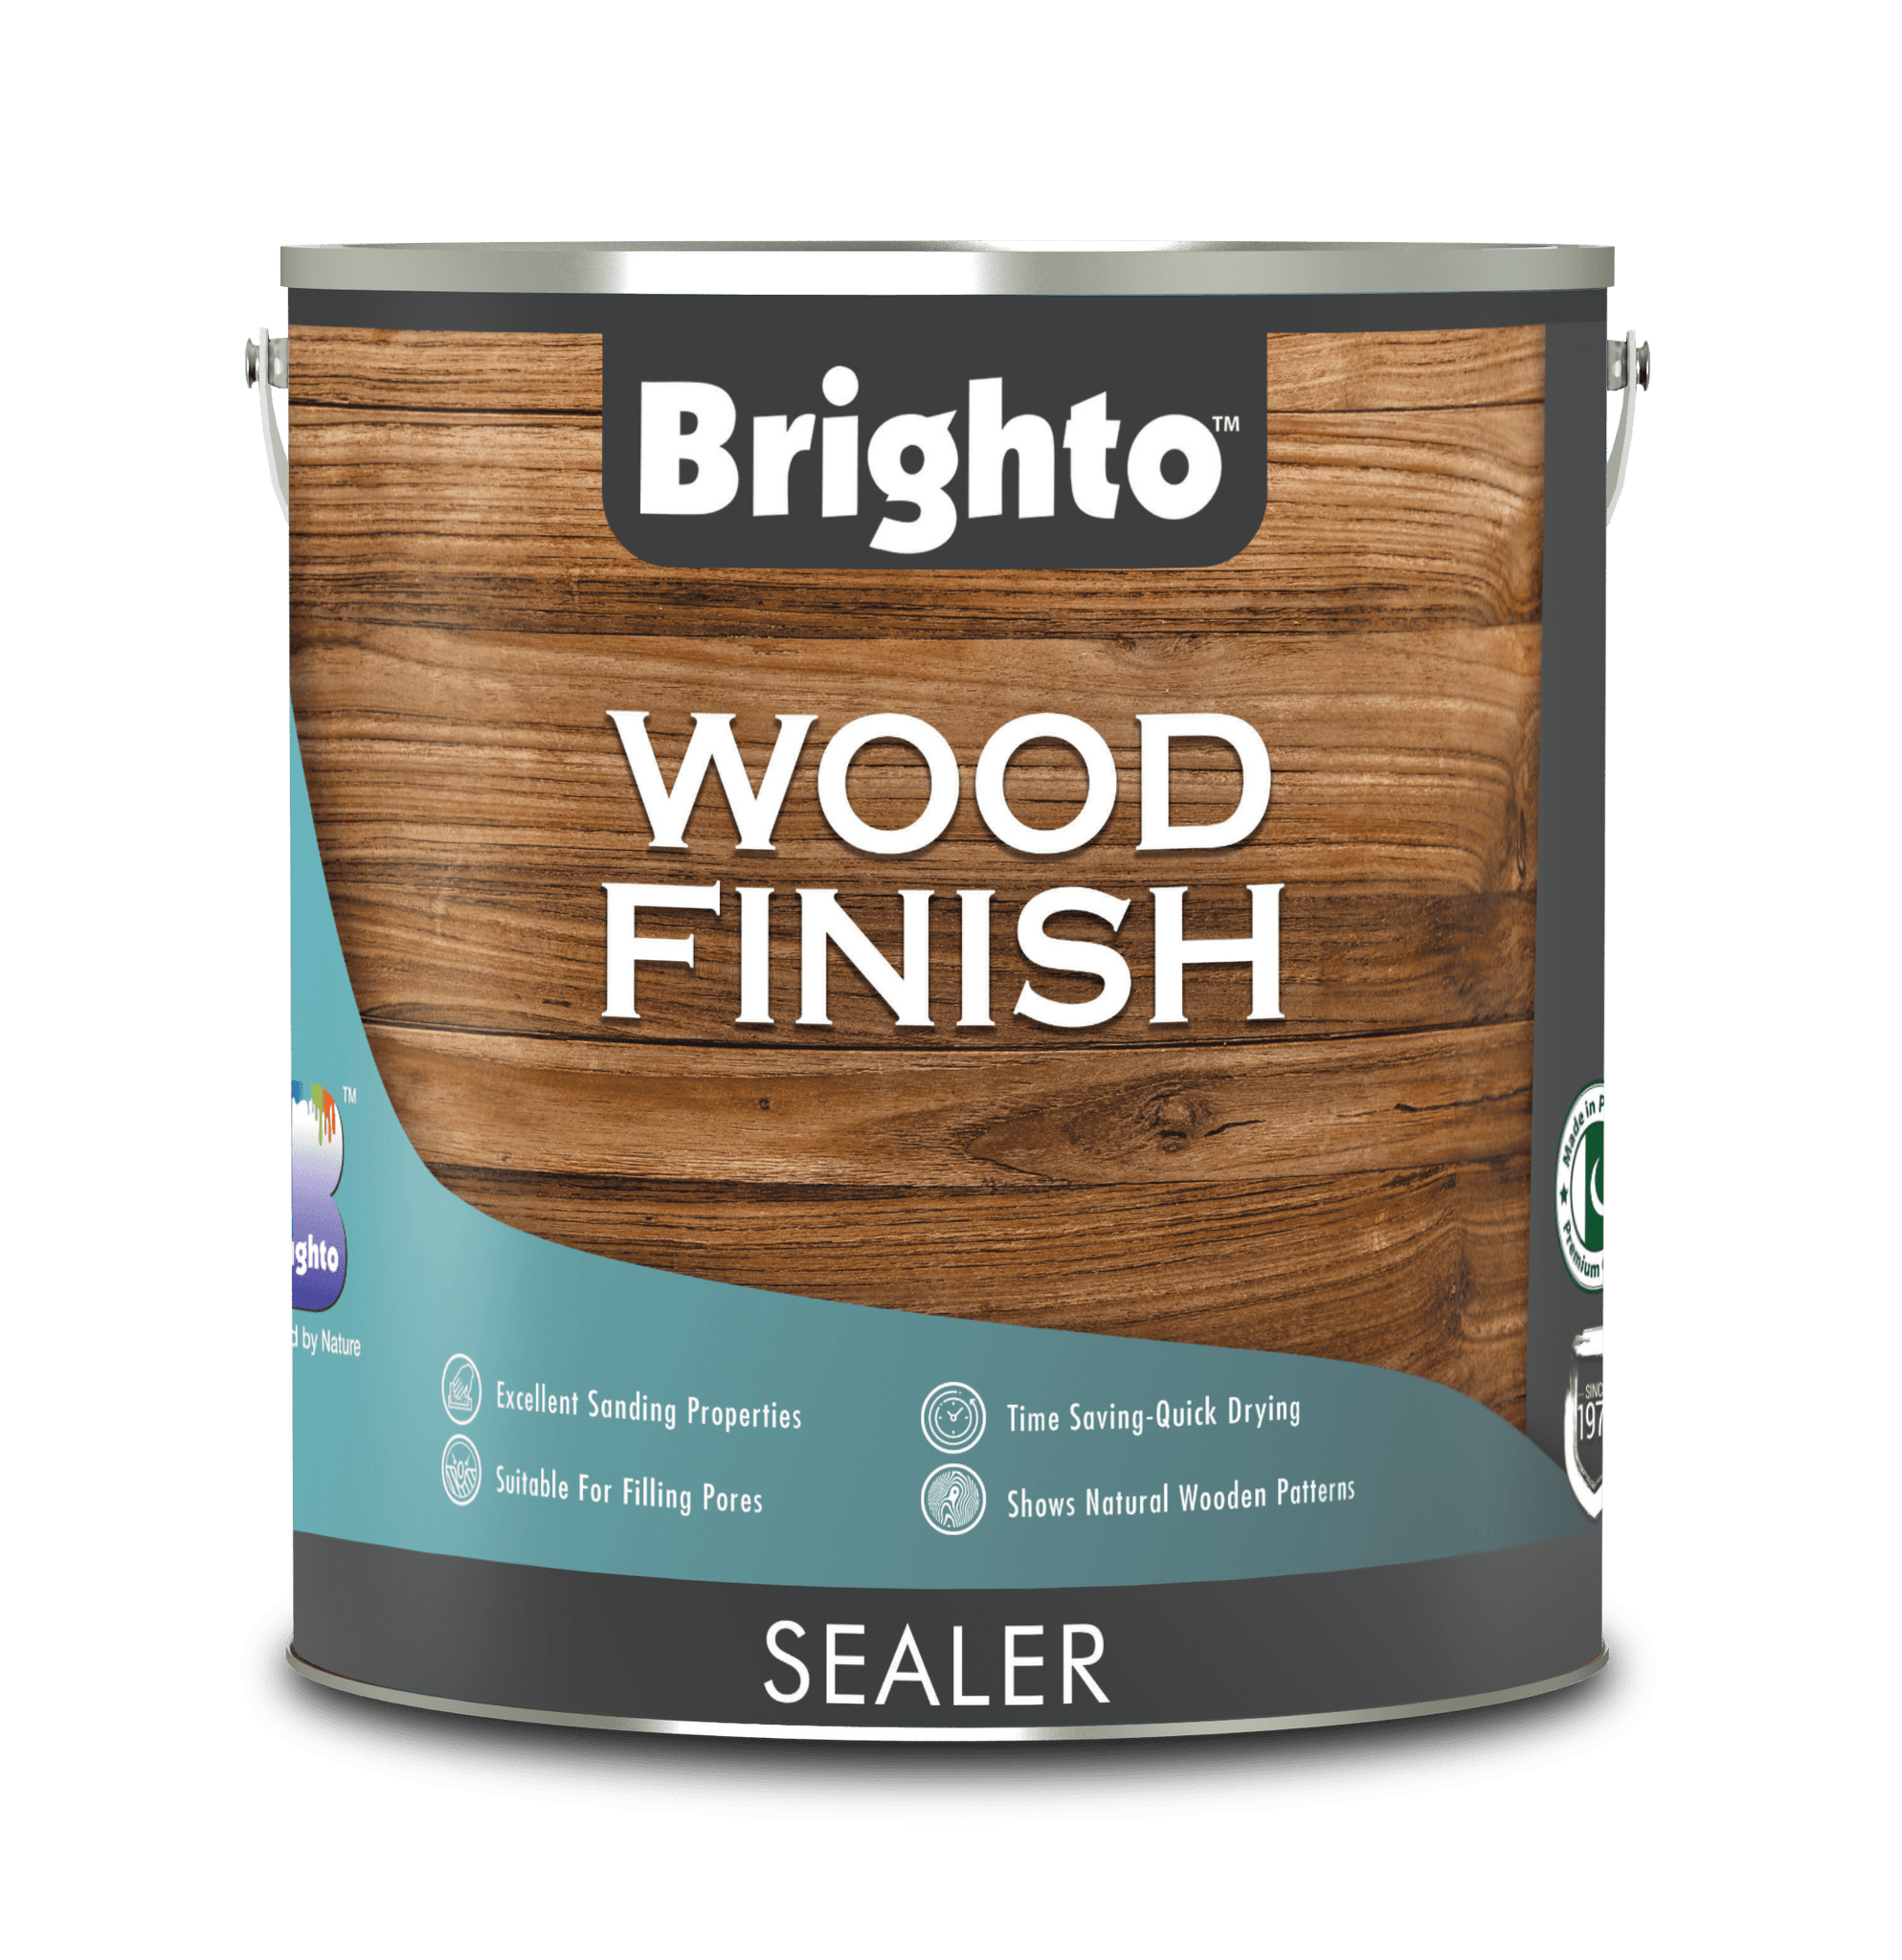 Brighto Wood Finish Sealer